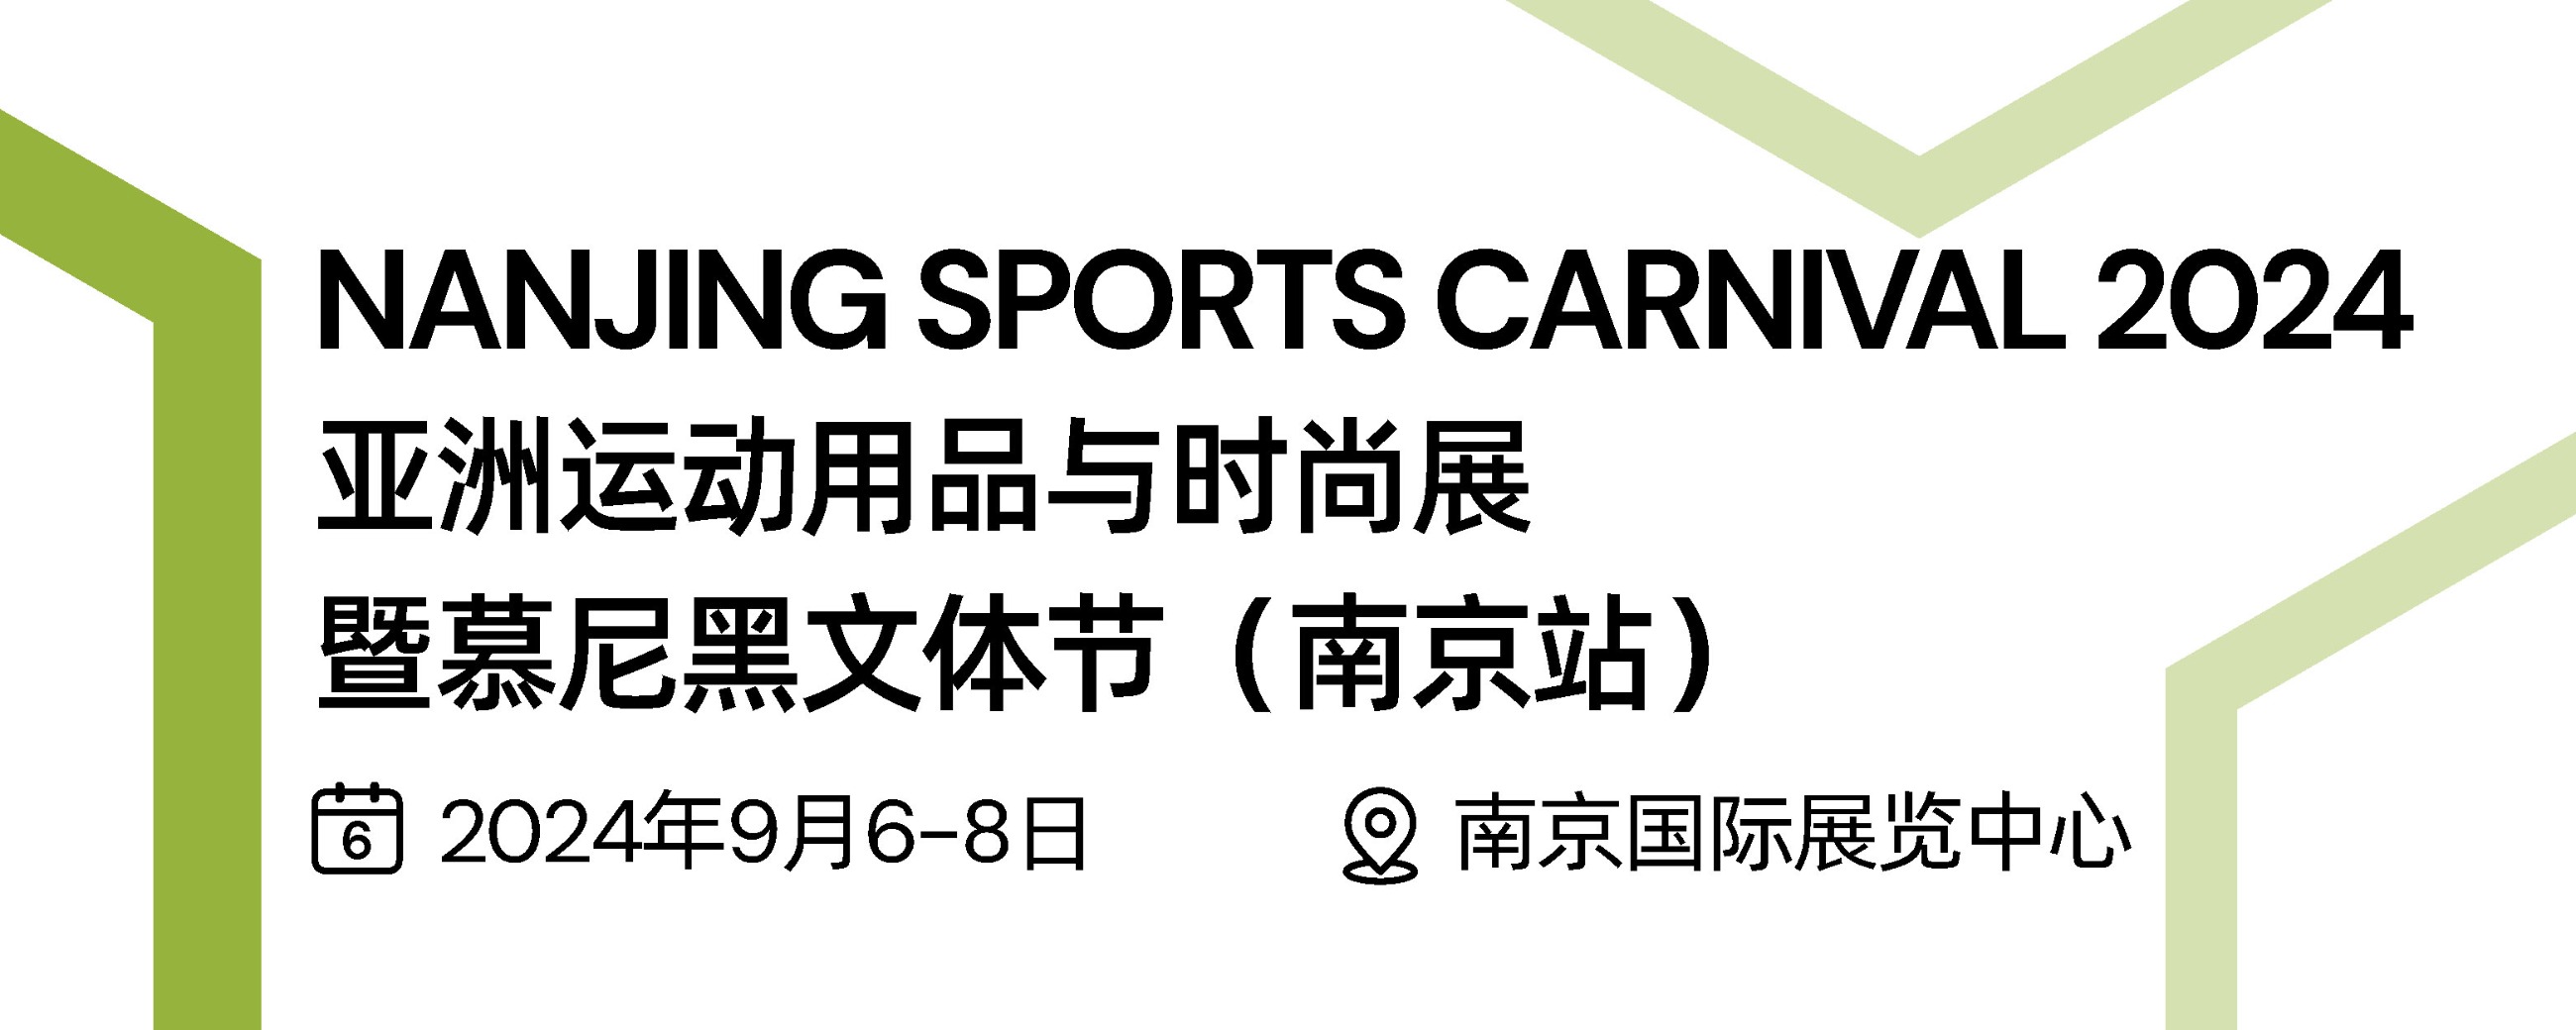 Nanjing Sports Carnival 2024. 亚洲运动用品与时尚展（南京站） 06 2024年9月6-8日 南京国际展览中心